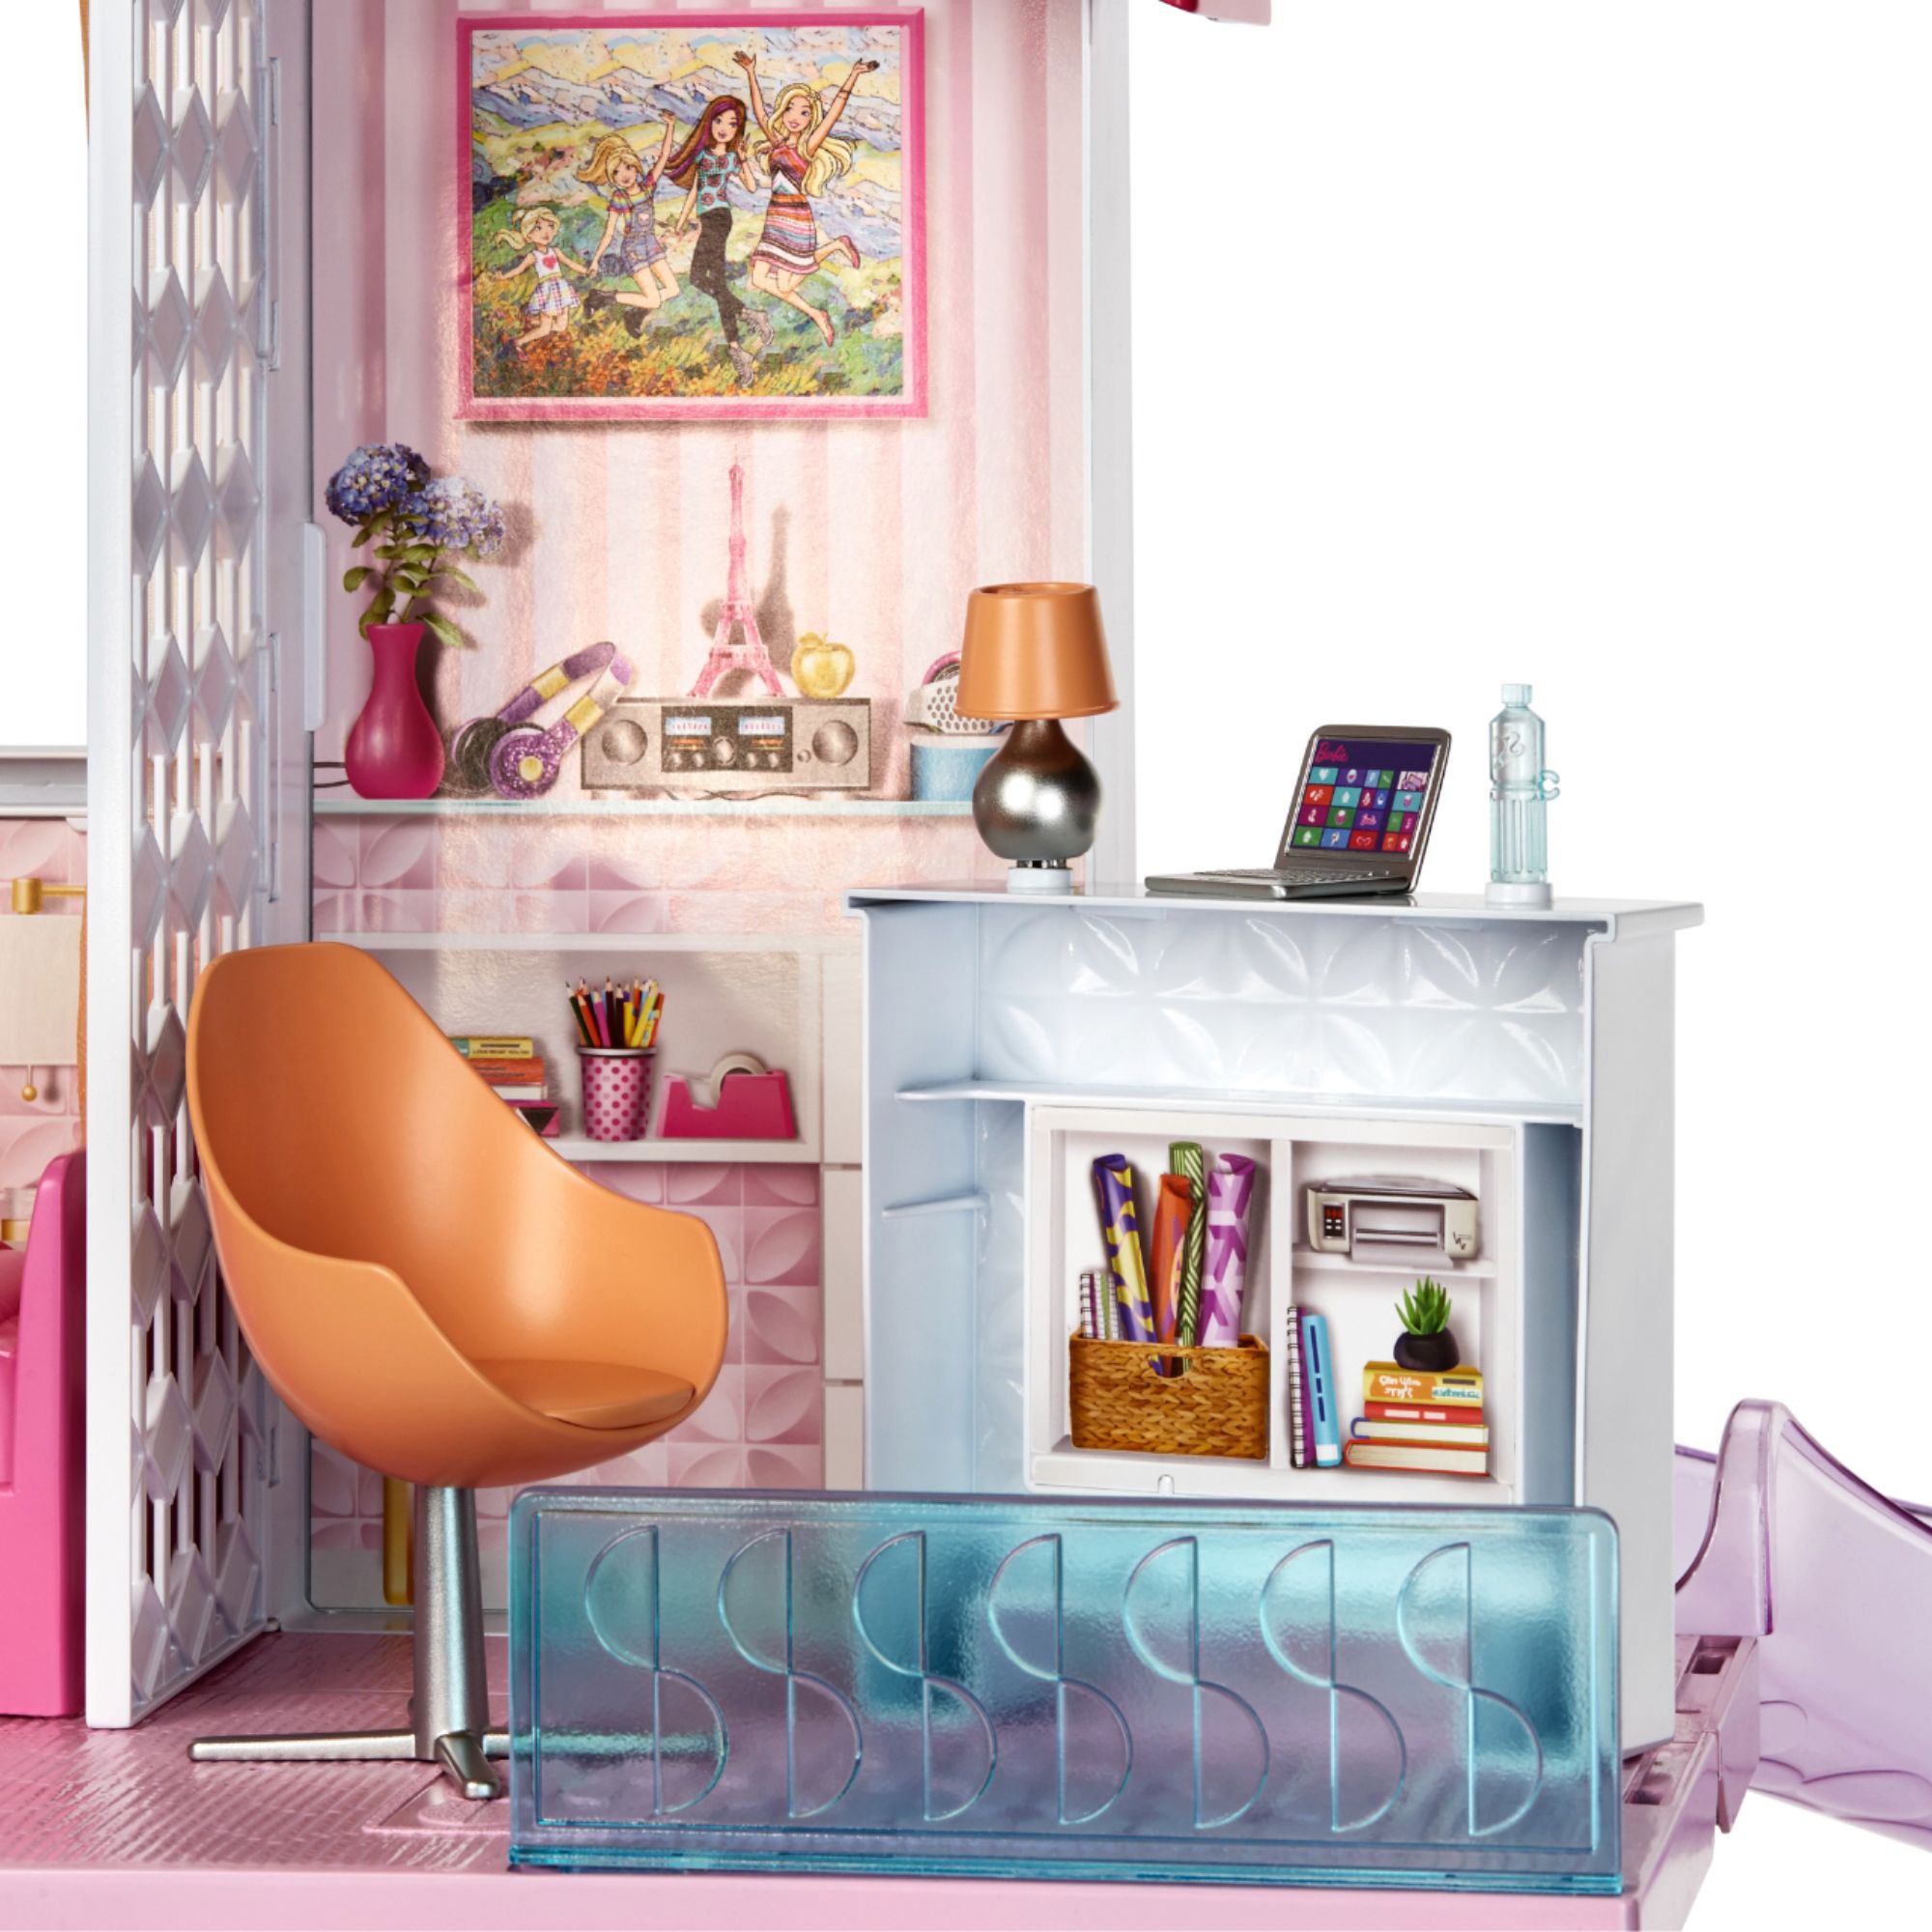 barbie home accessories